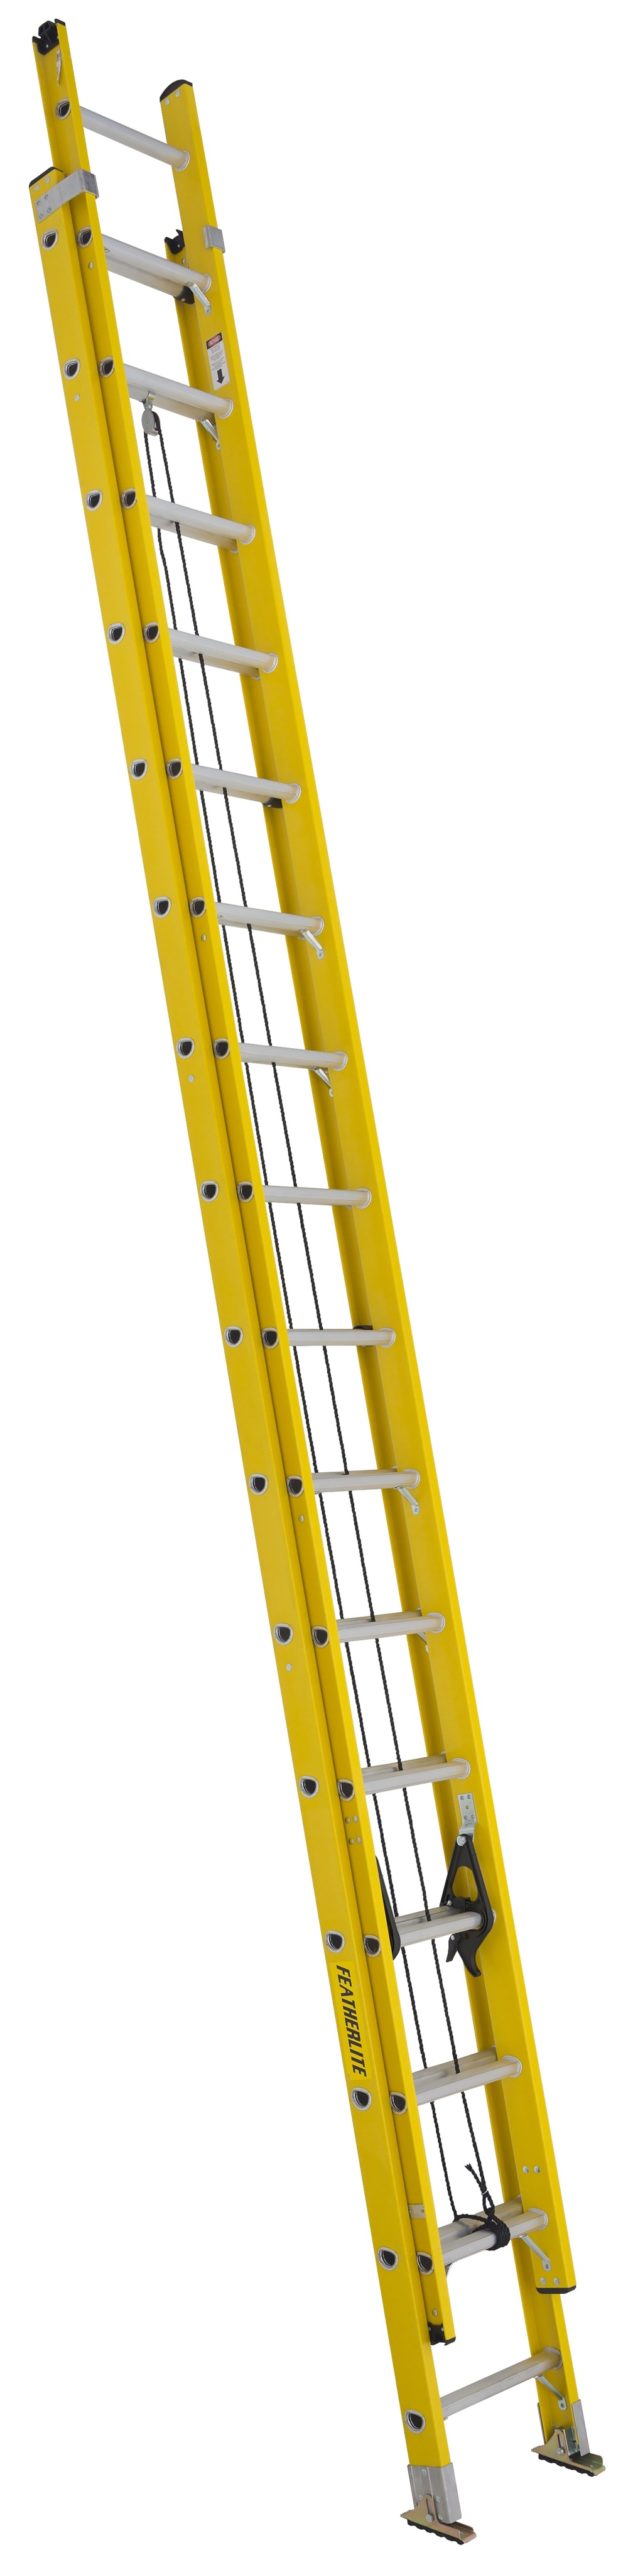 FL-3020-32 - Featherlite Ladders